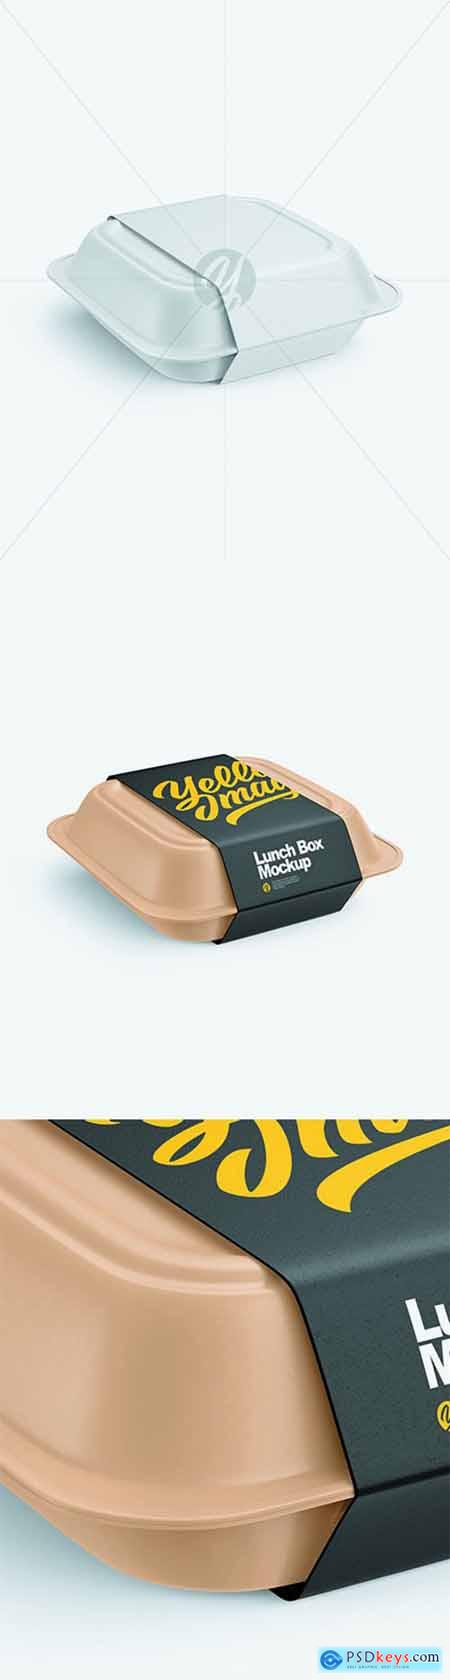 Lunch Box Mockup 68816